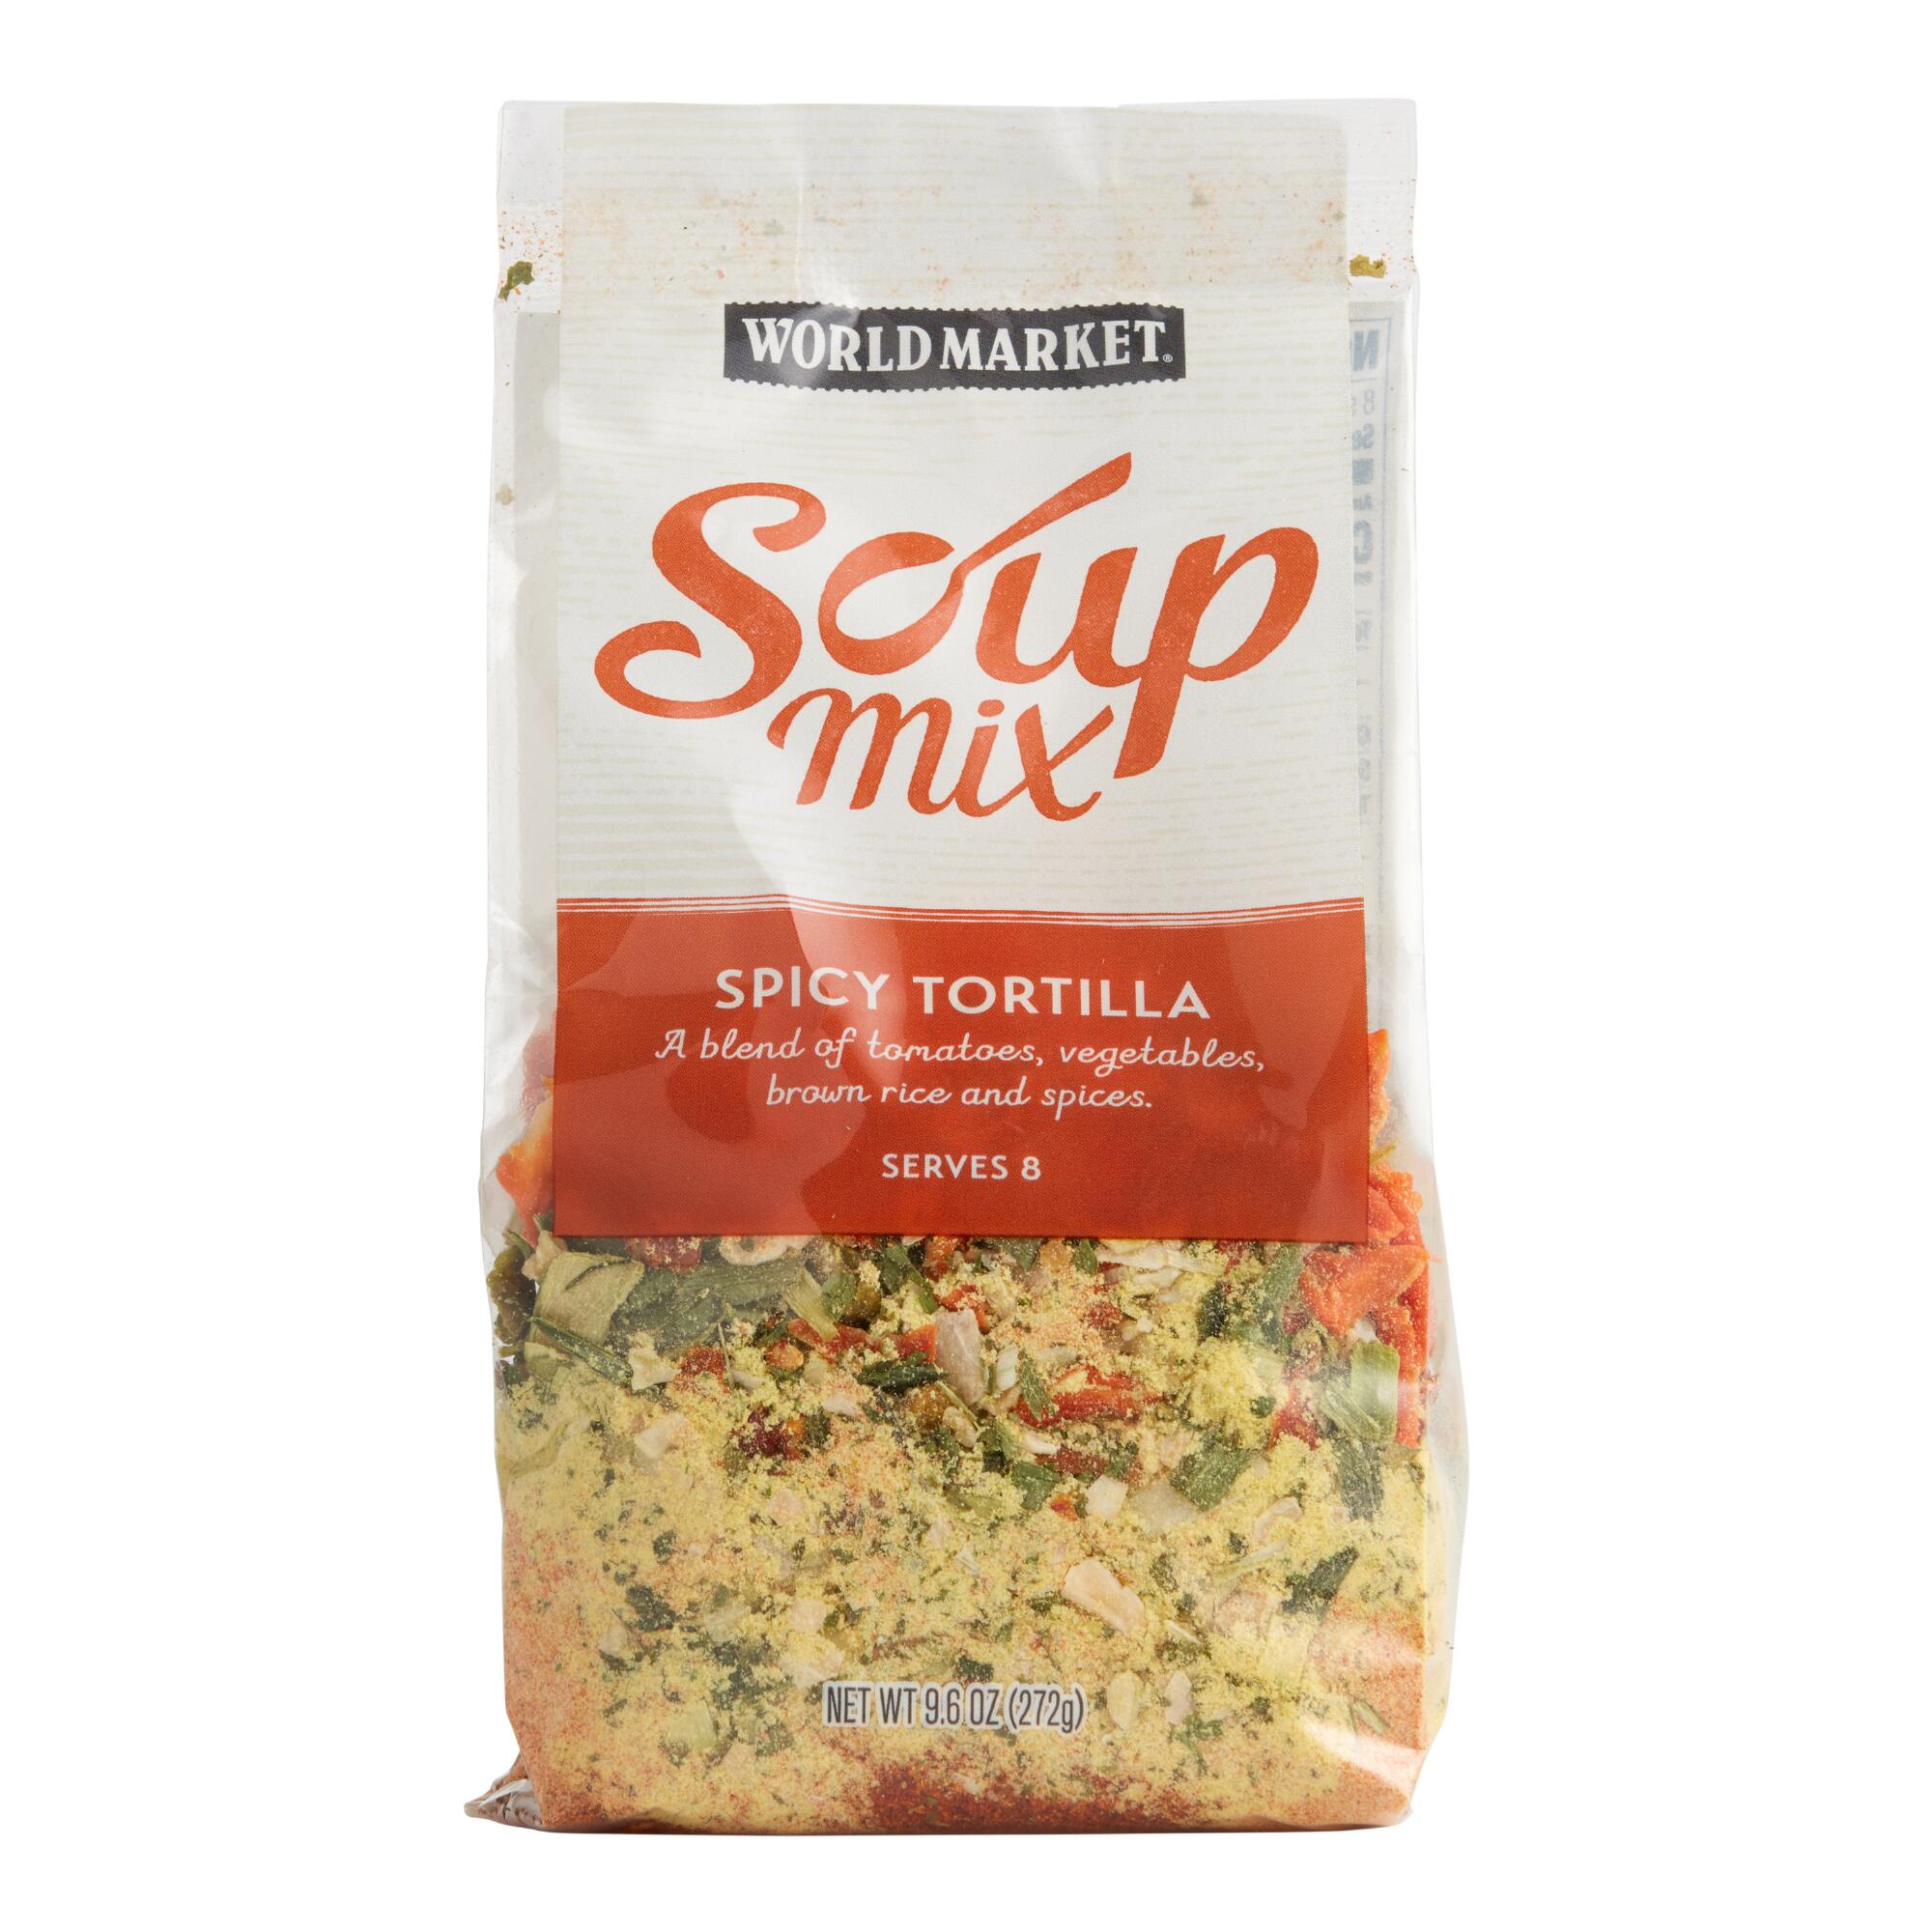 World Market Spicy Tortilla Soup Mix Set of 2 by World Market